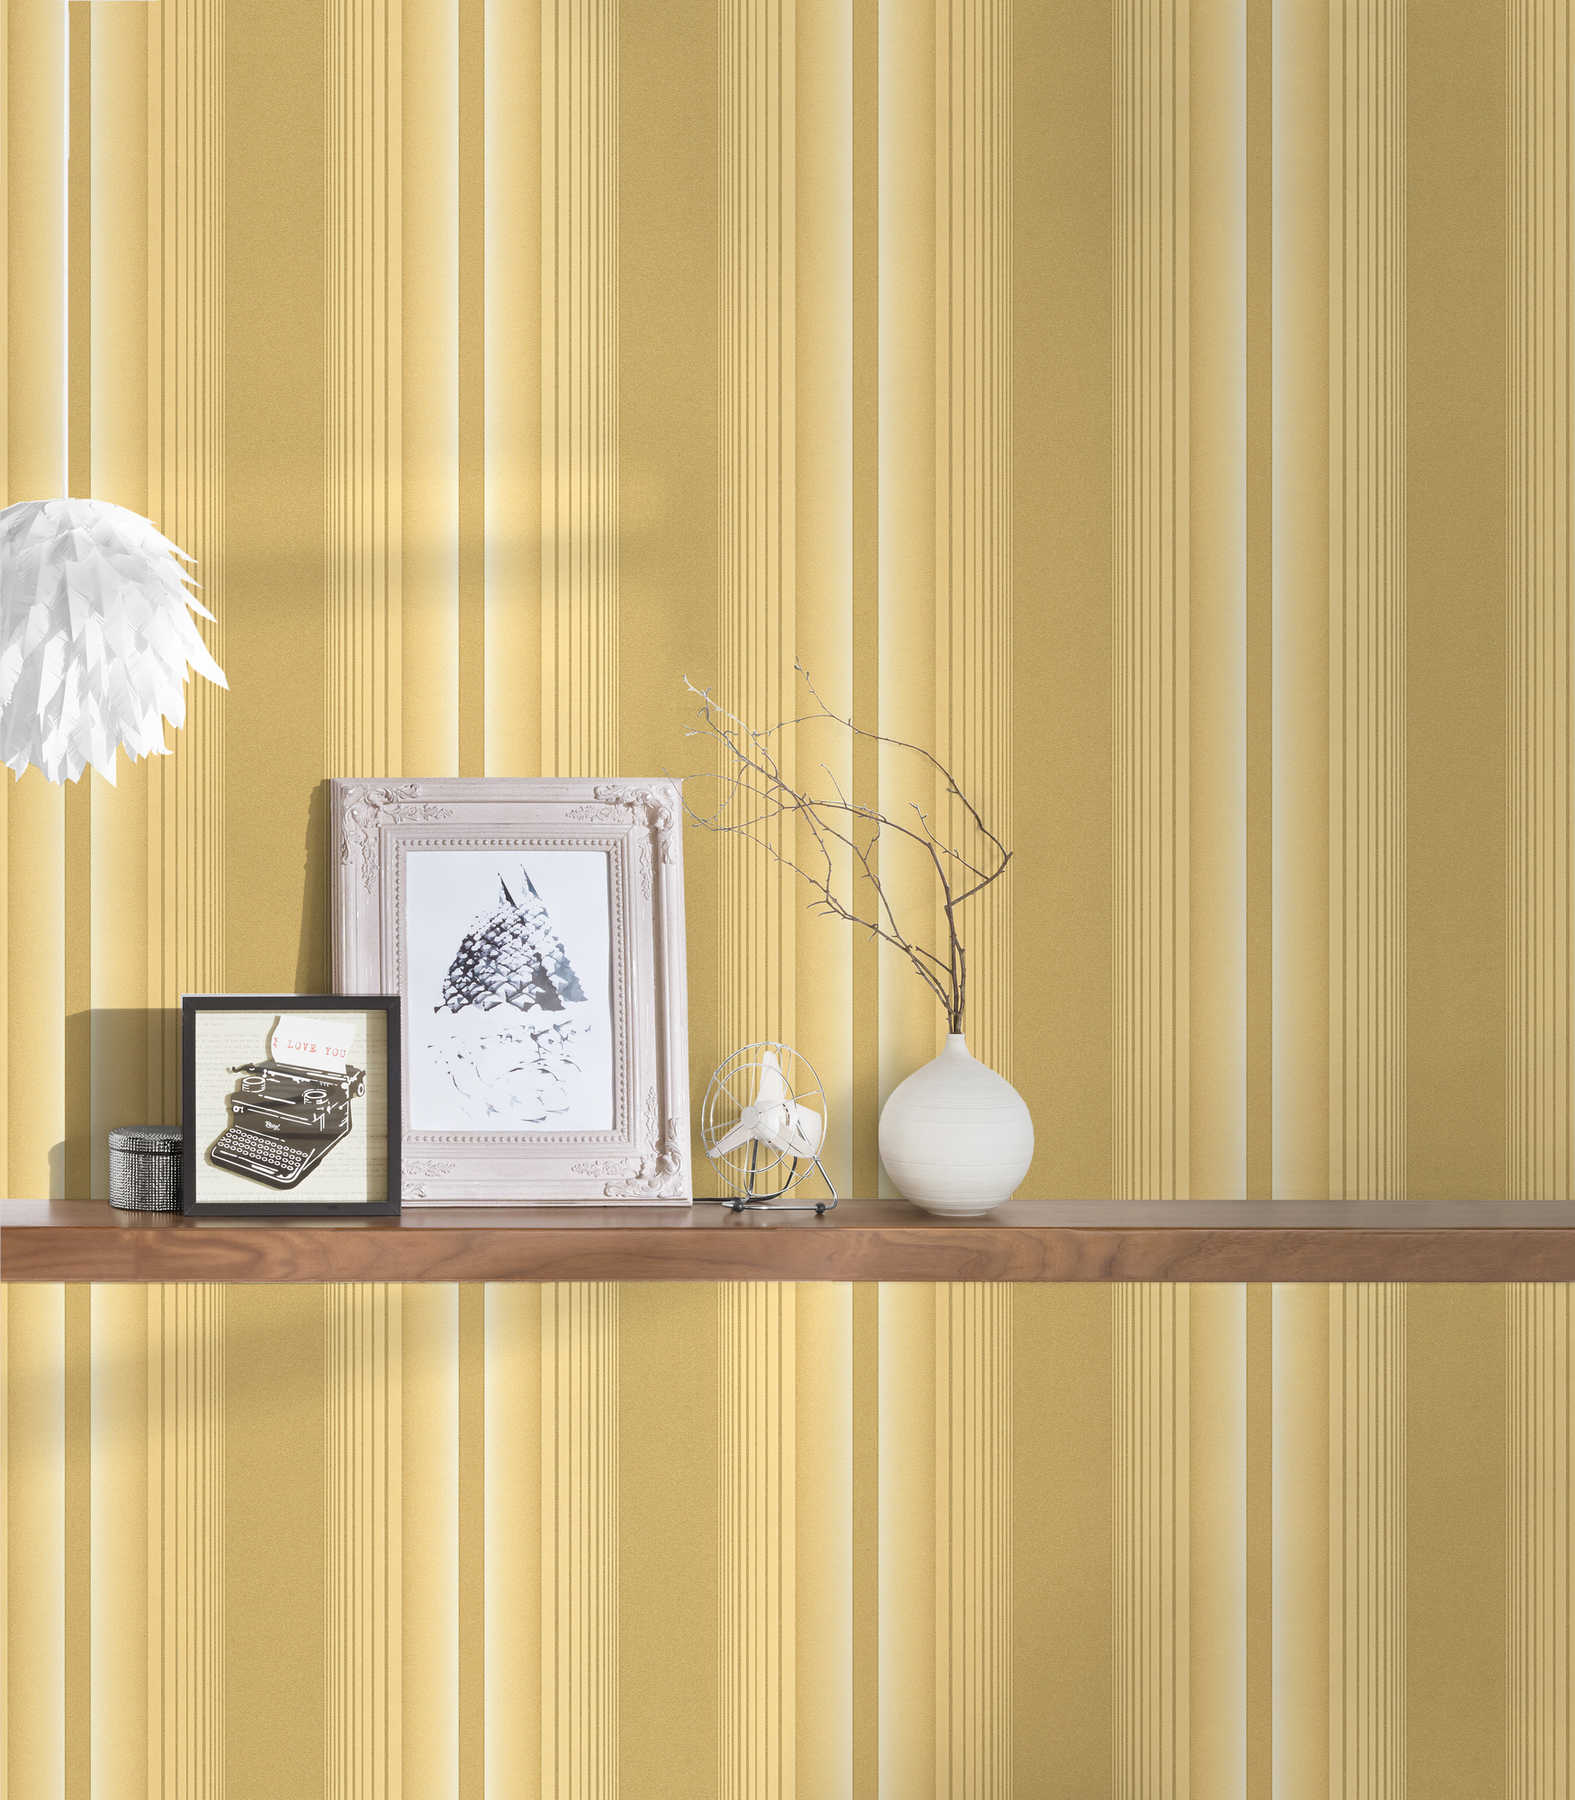             Goldene Tapete mit Streifenmuster, elegant & opulent
        